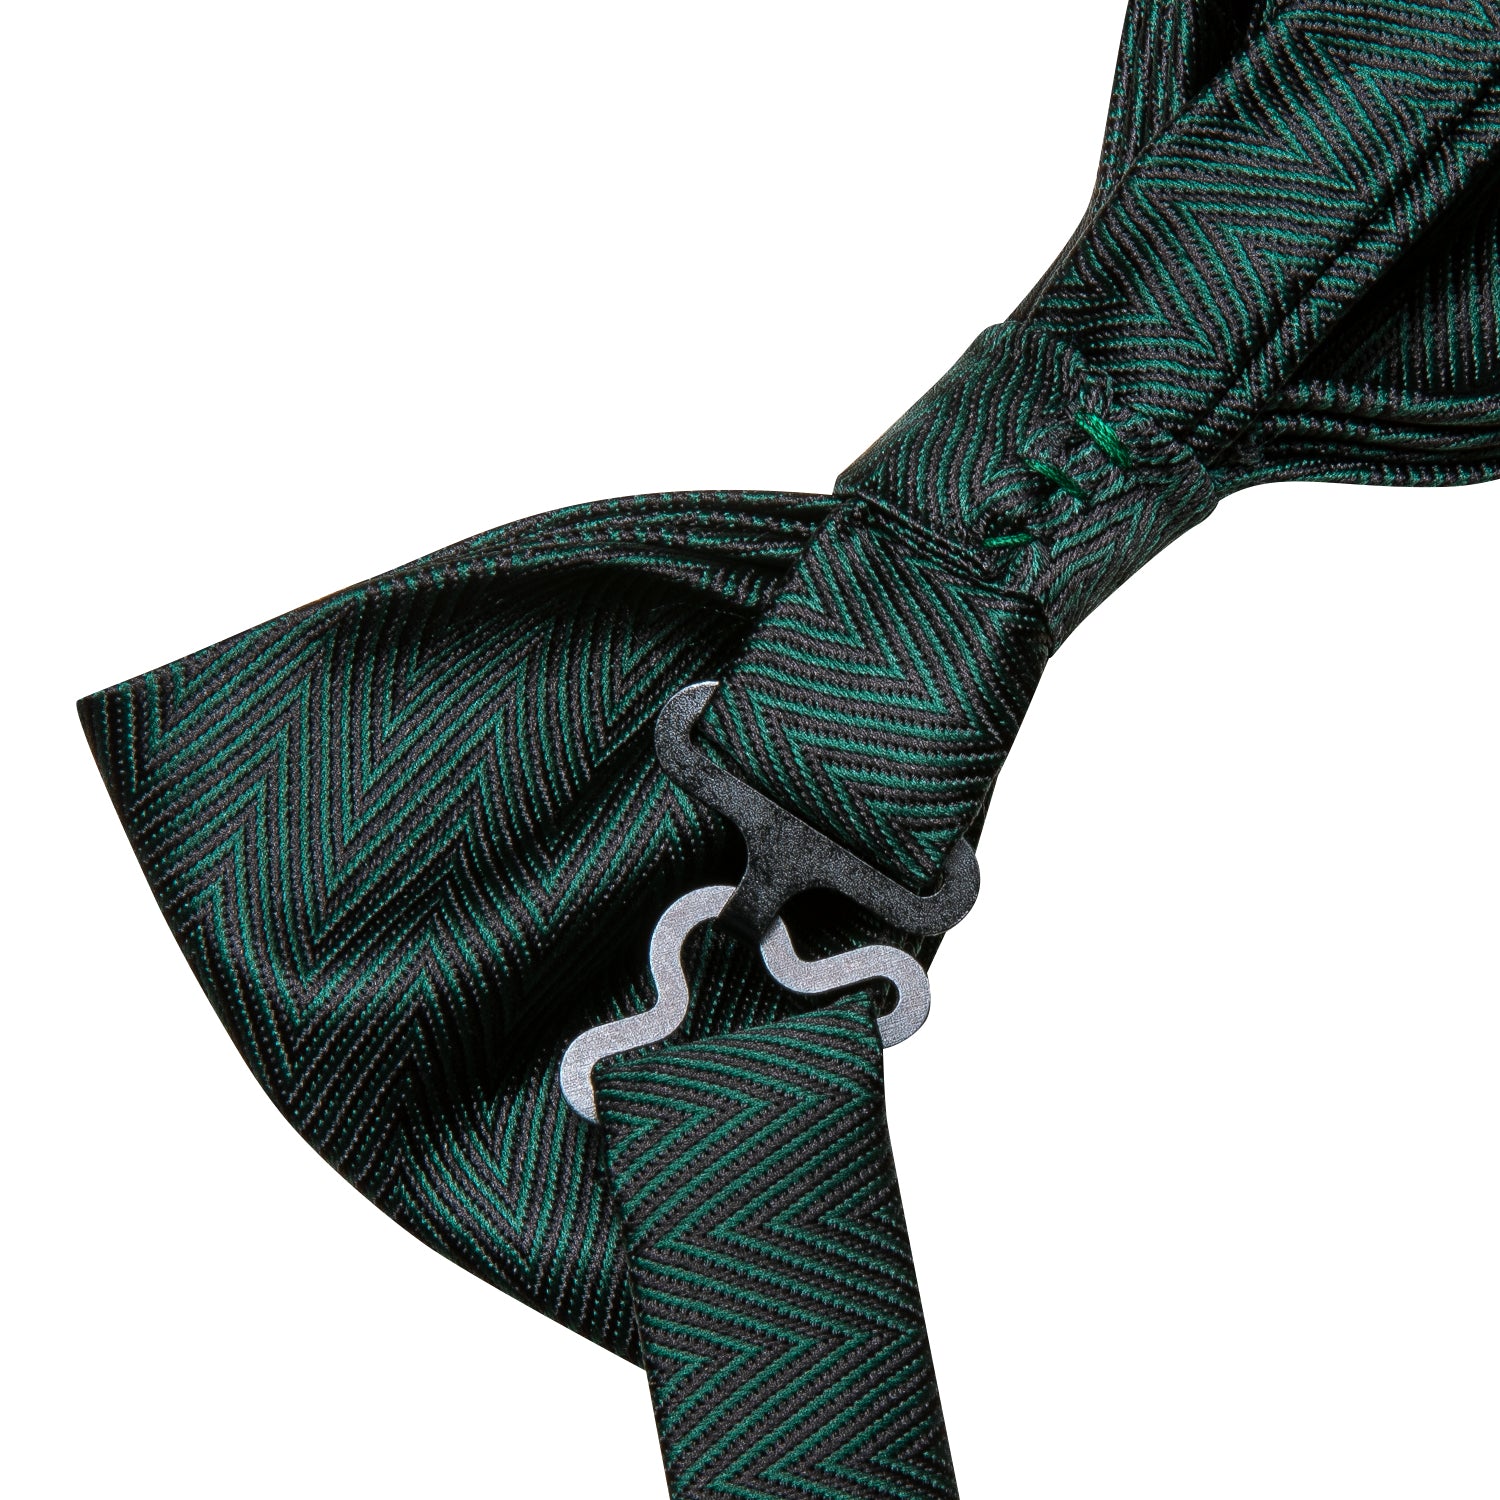 Hi-Tie Deep Green Novelty Pre-tied Bow Tie Hanky Cufflinks Set